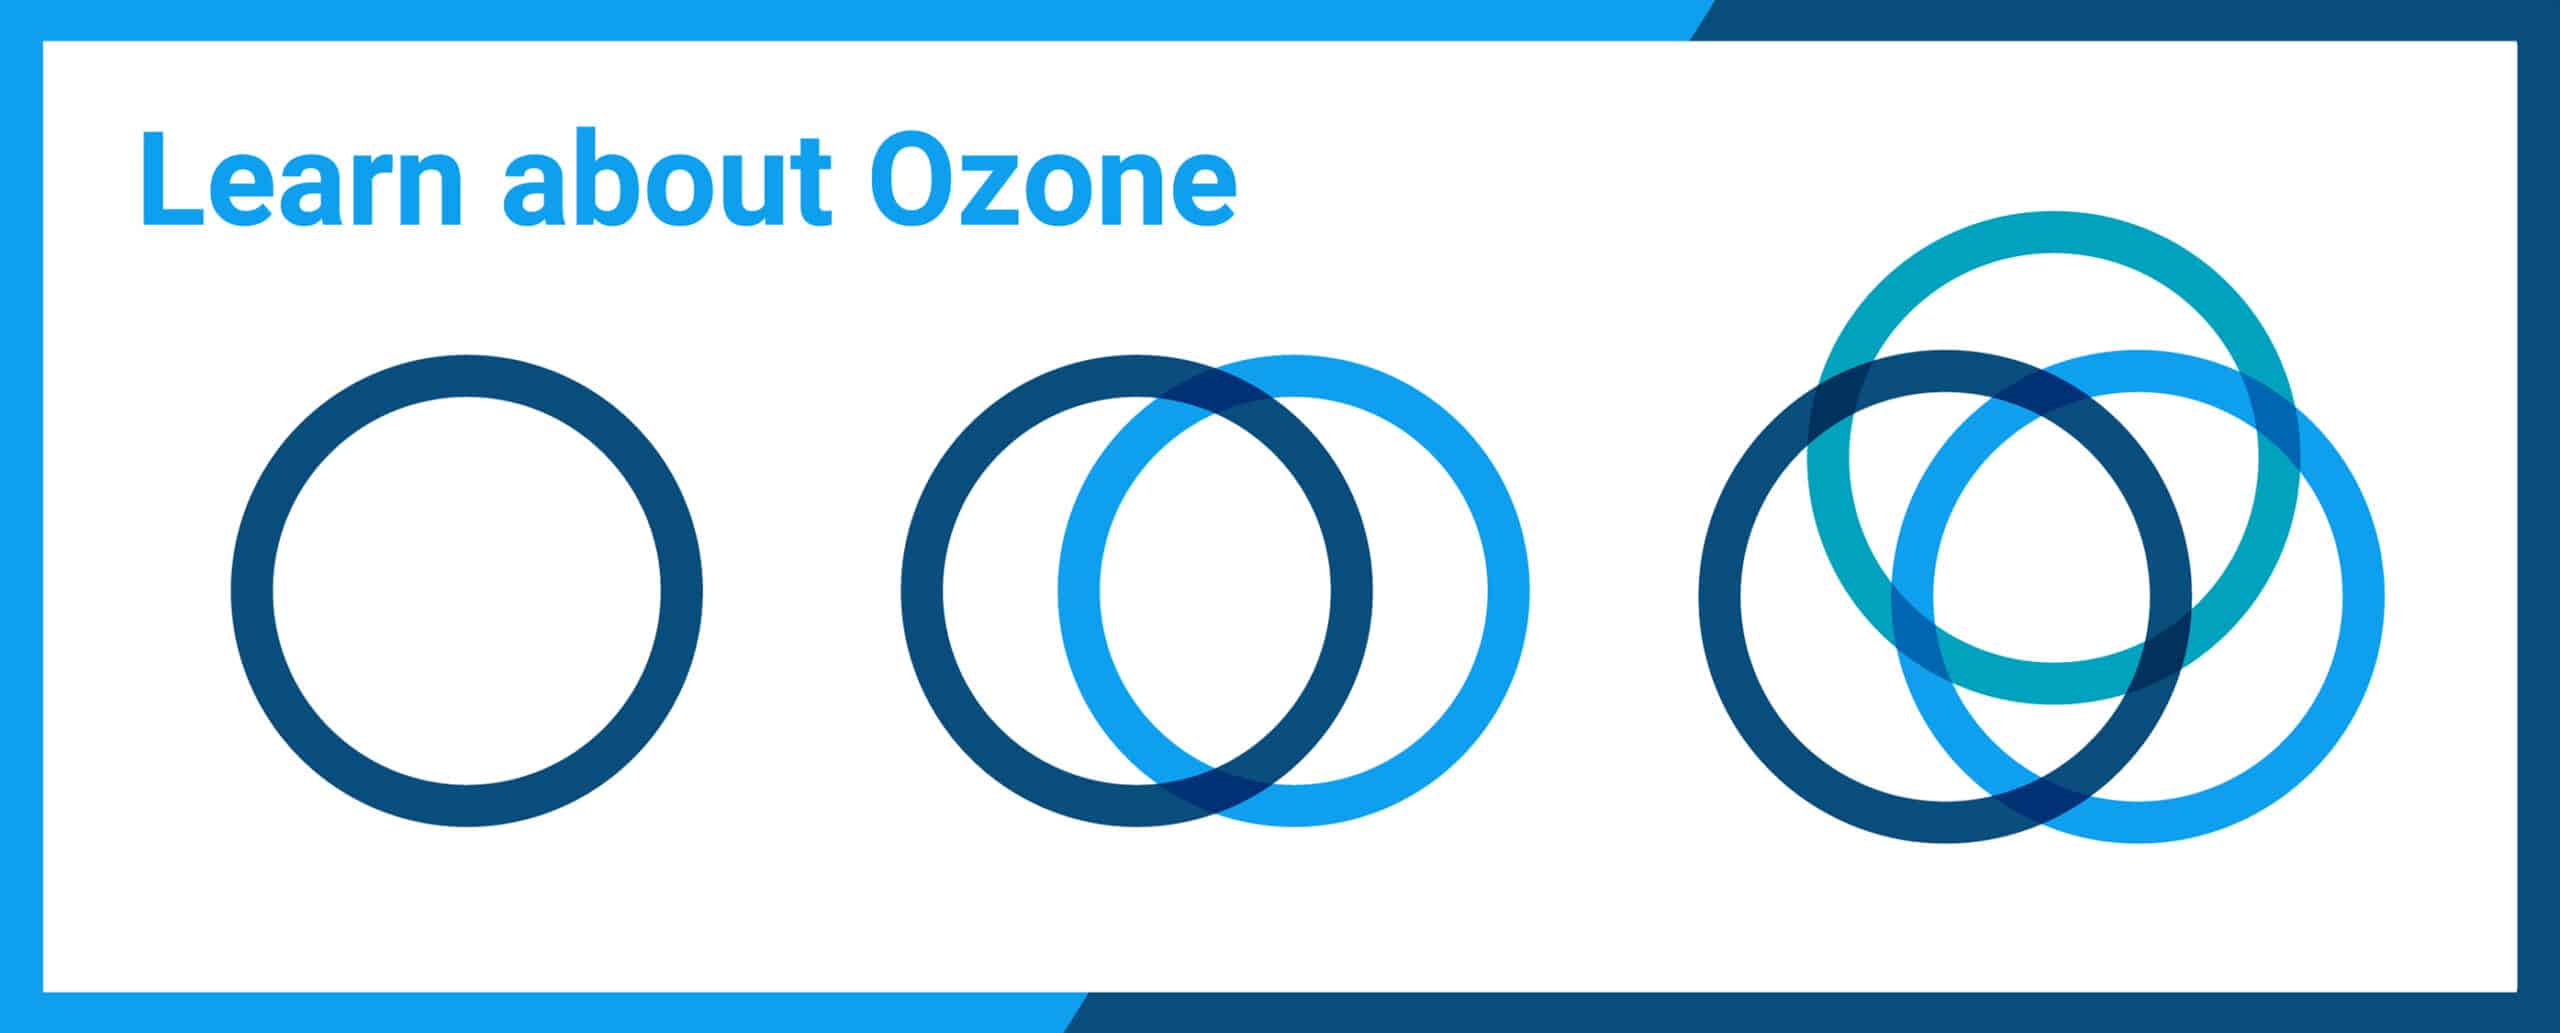 Say hello to Ozone